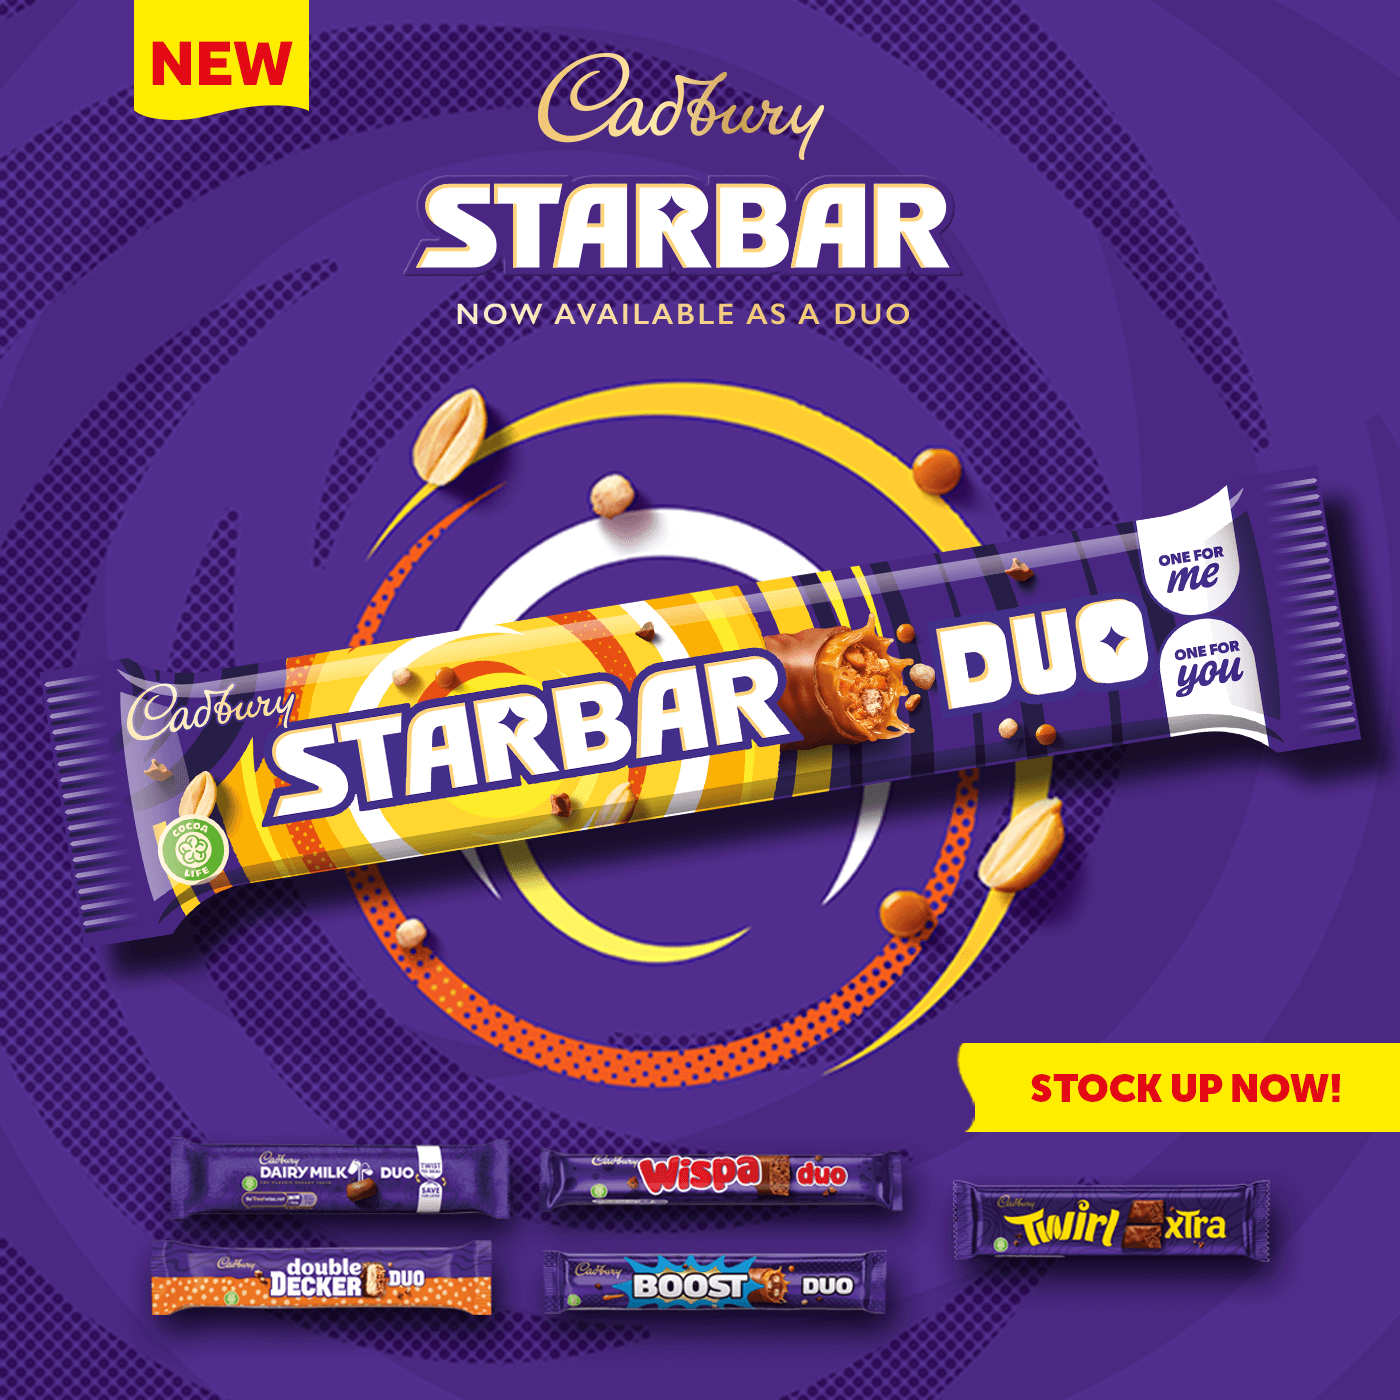 Starbar – ‘Starbar Joins Successful Cadbury Duo range’